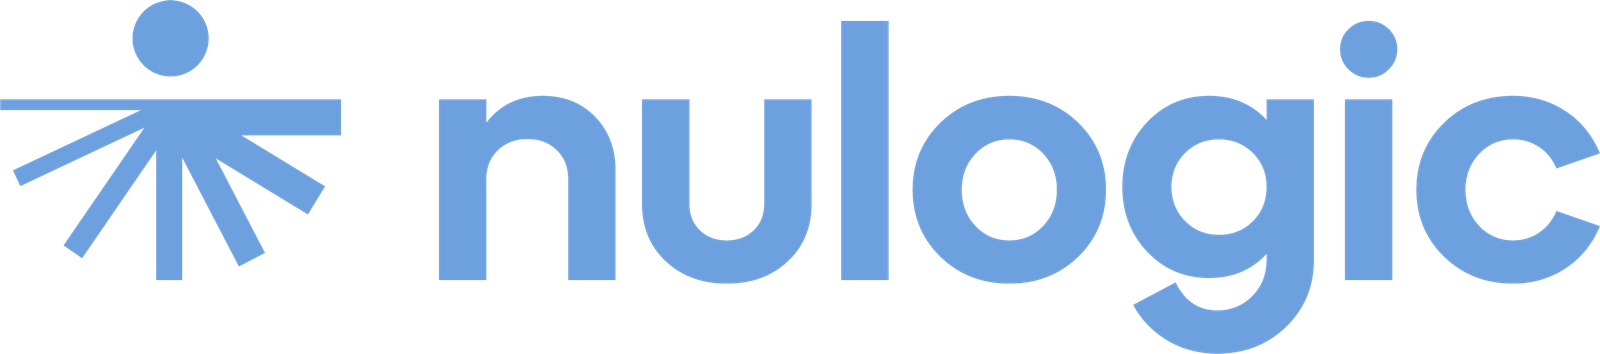 nulogic wordmark and vitruvian man logo in blue